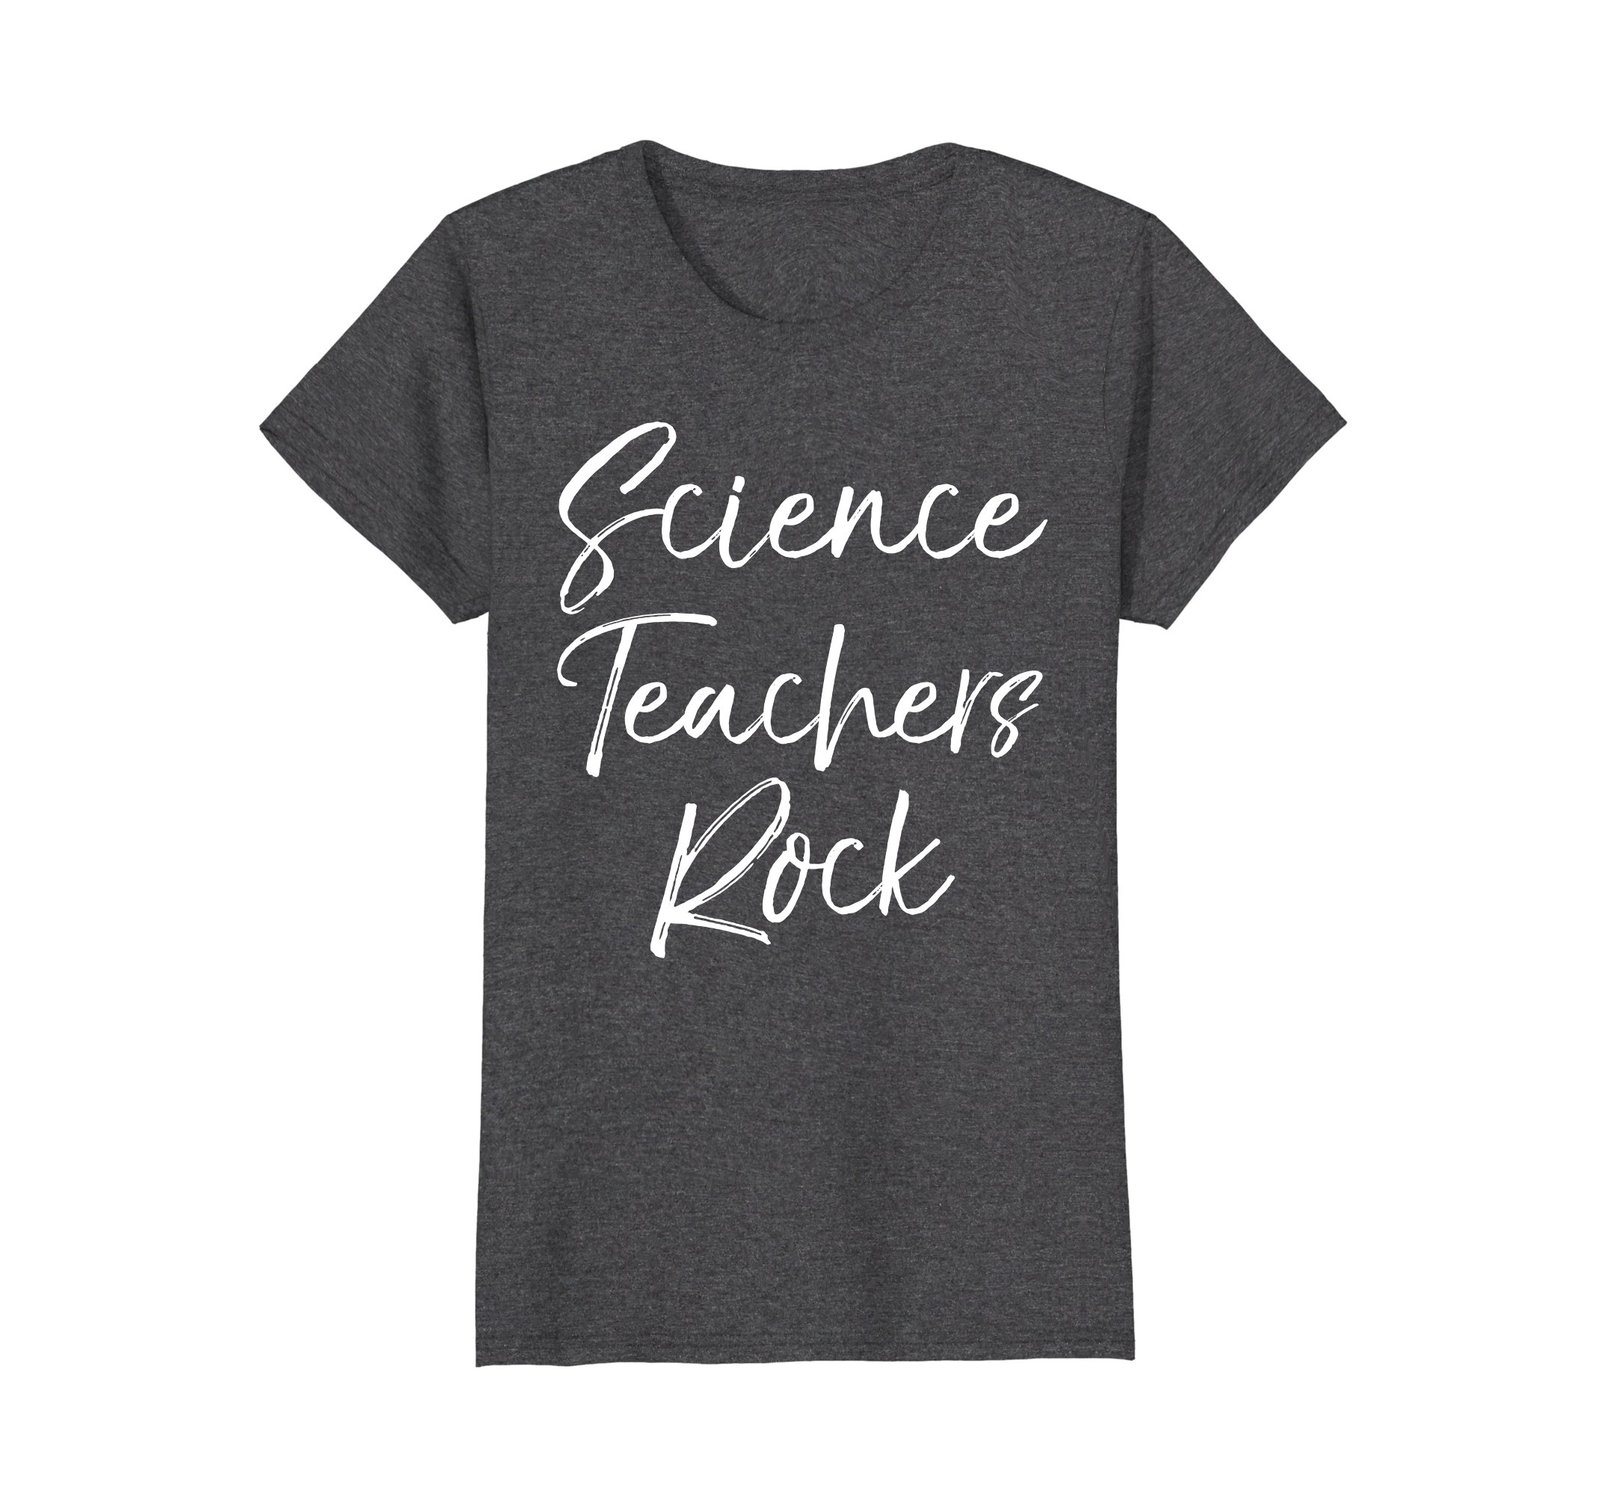 Funny Shirts - Science Teachers Rock Shirt Cool Teaching End of School Gift Wowe